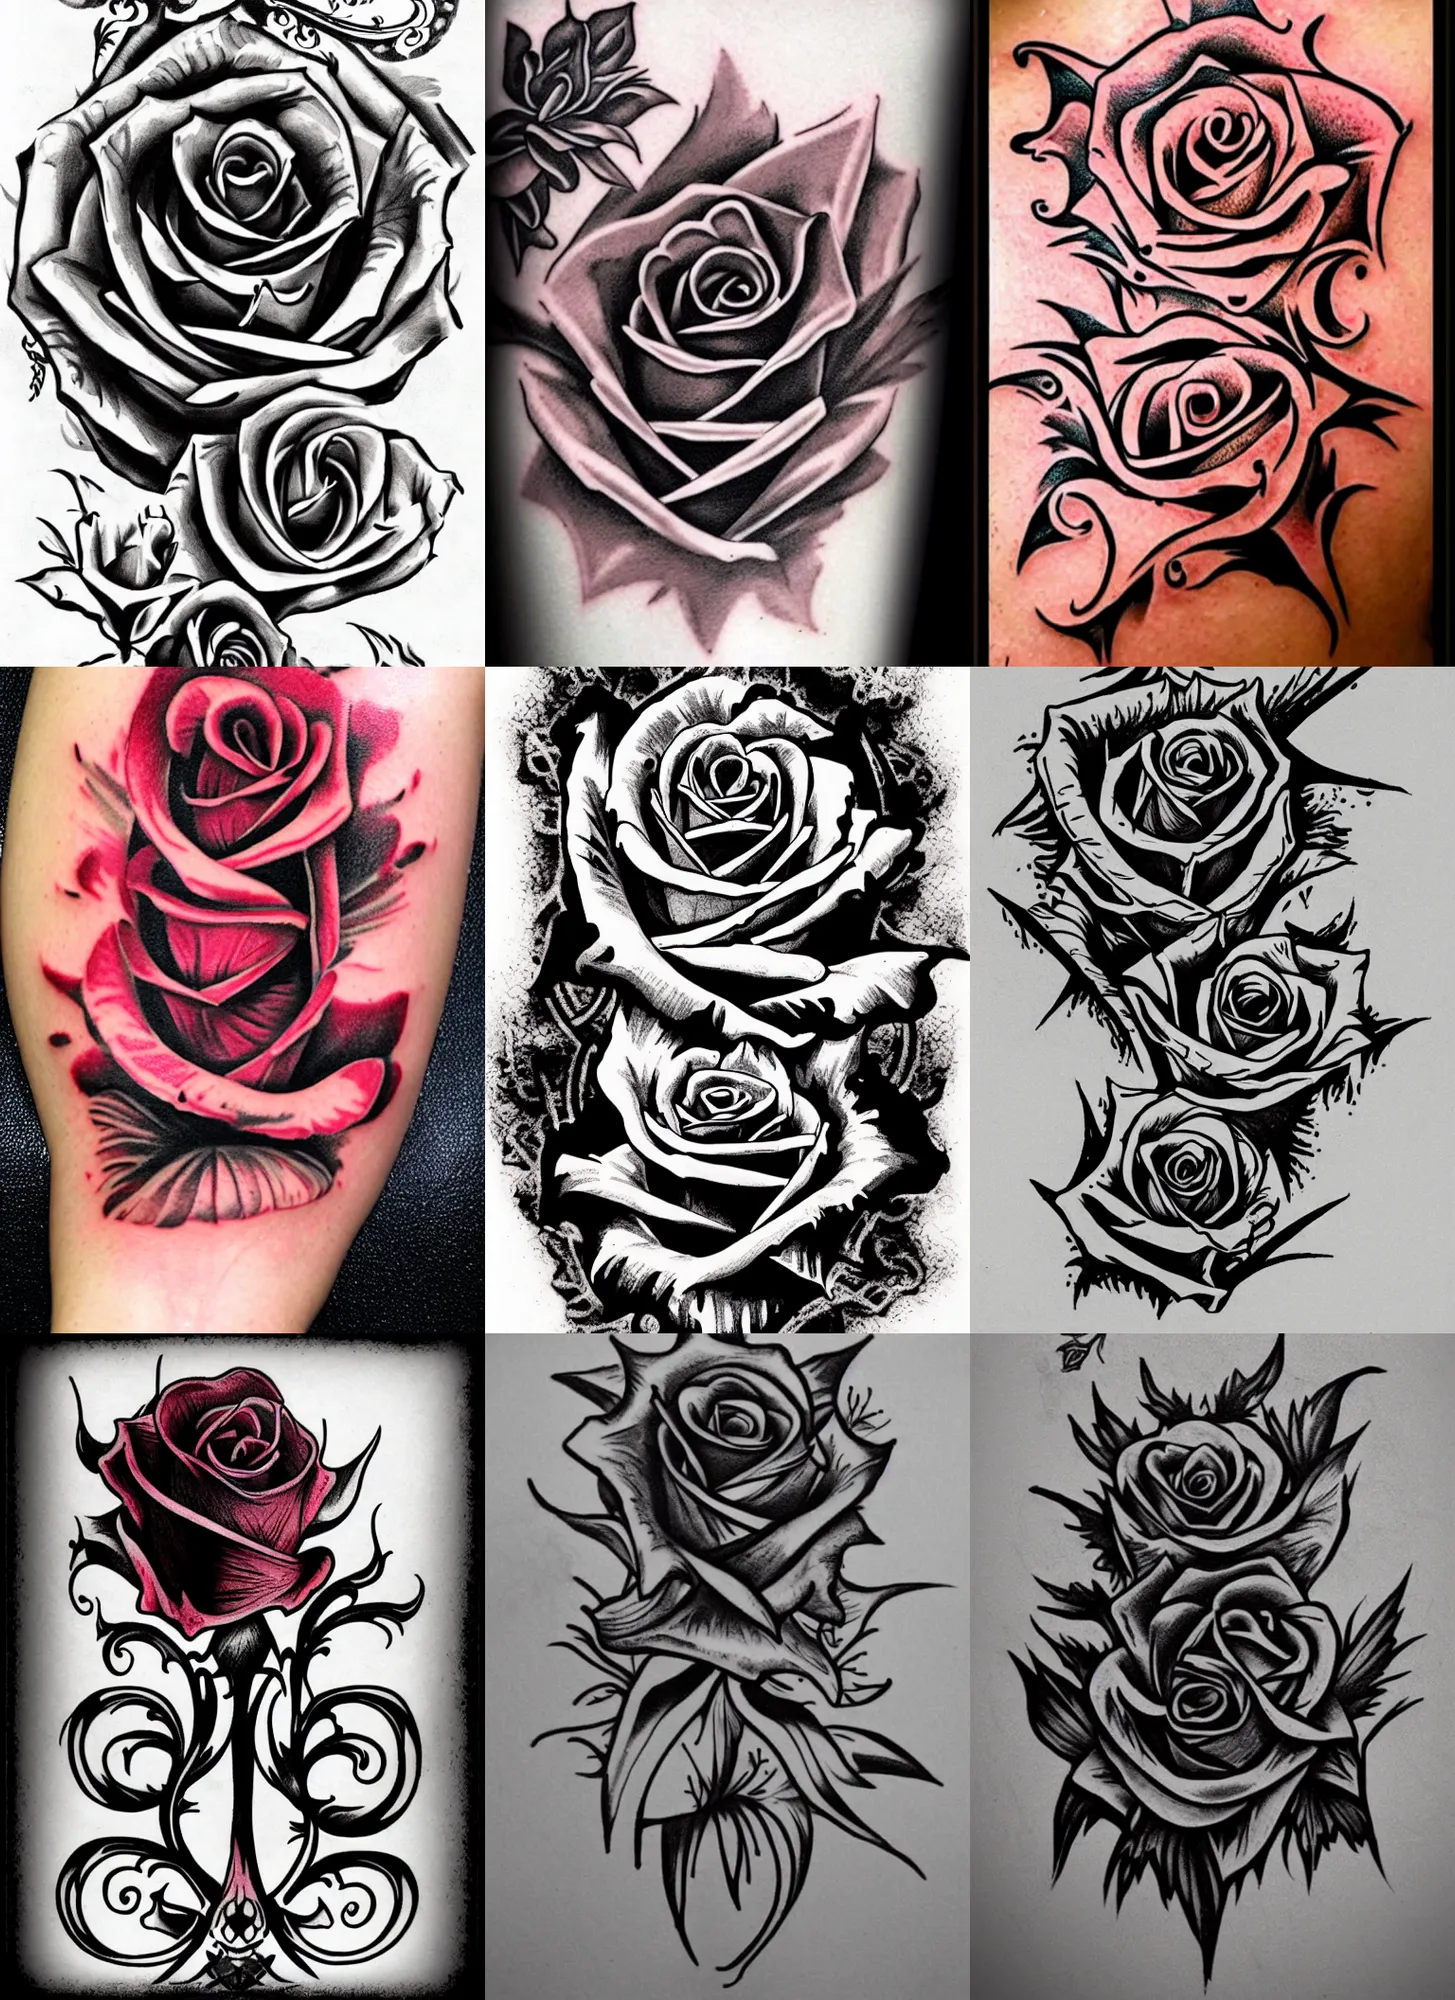 Prompt: Tattoo Design demonic evil rose Stencil